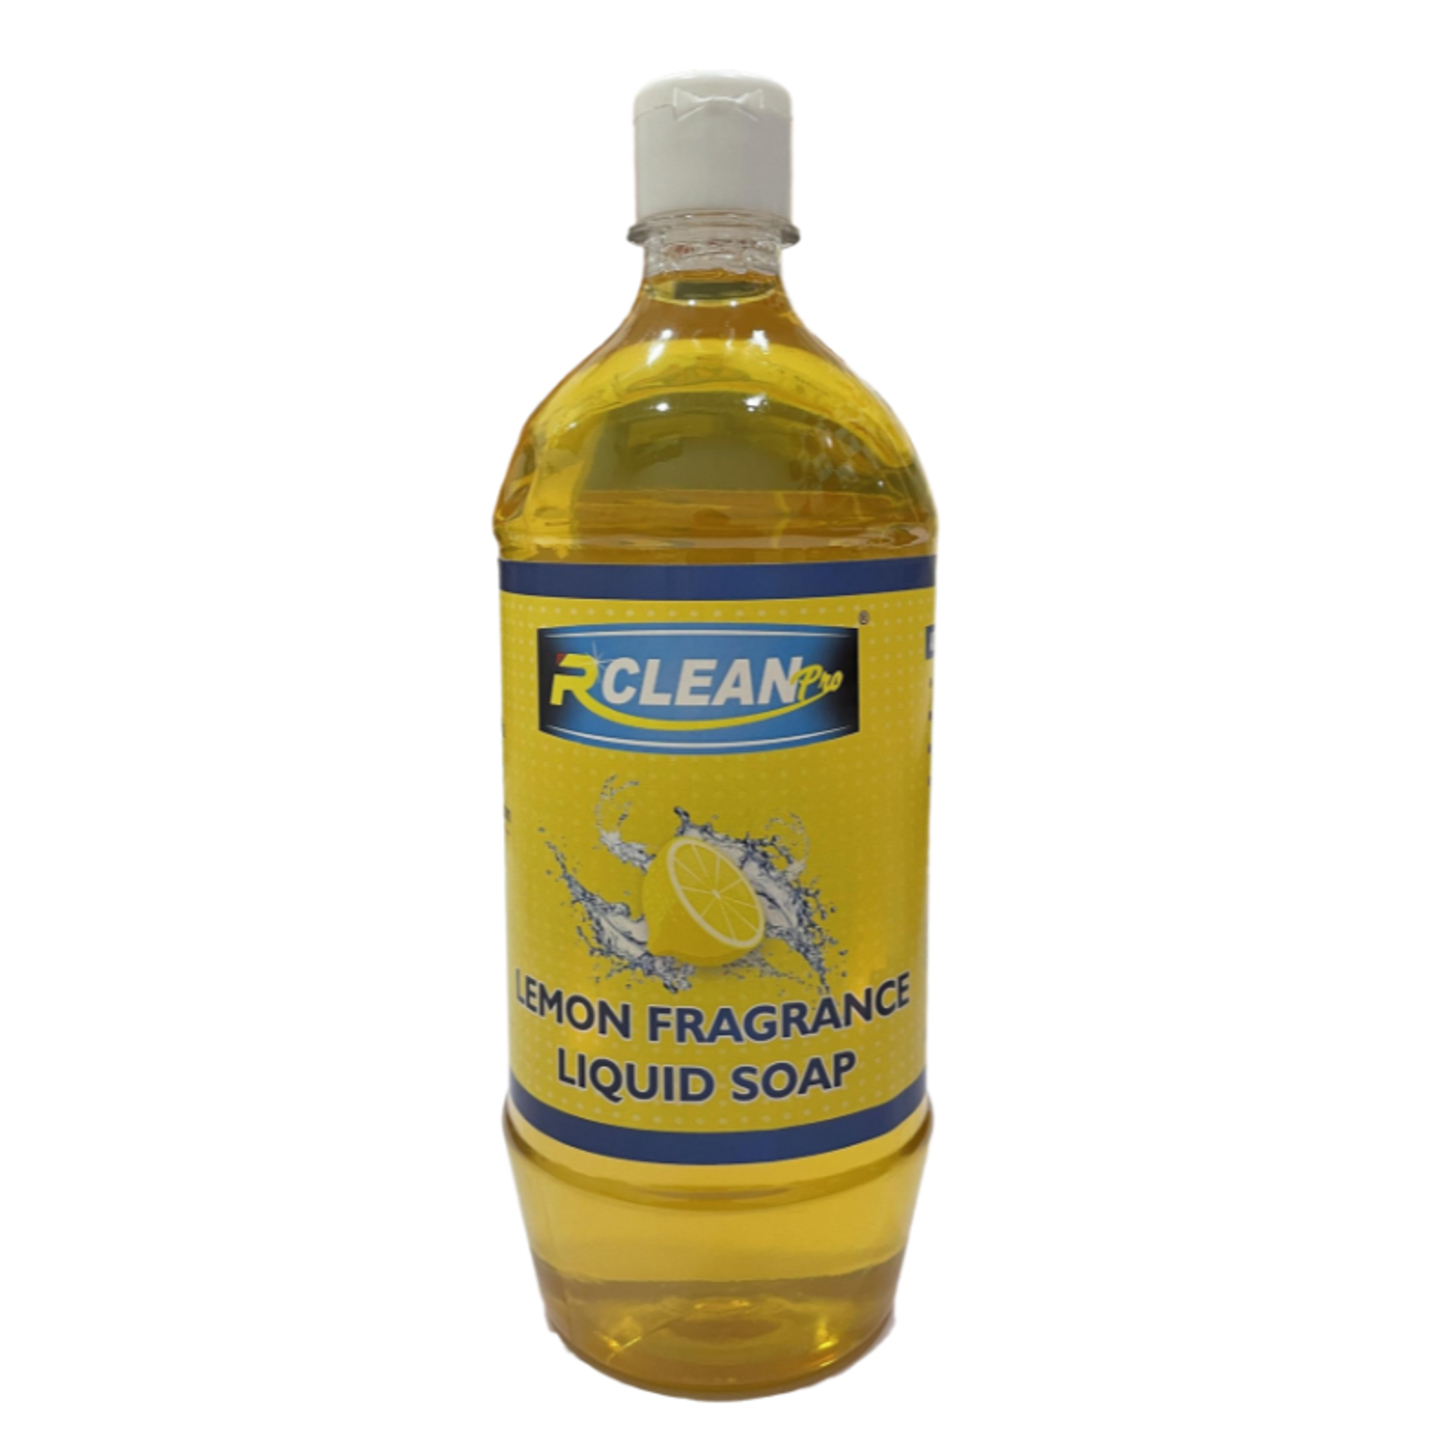 RCLEAN PRO Fragrance boosted Liquid Soap 1 L